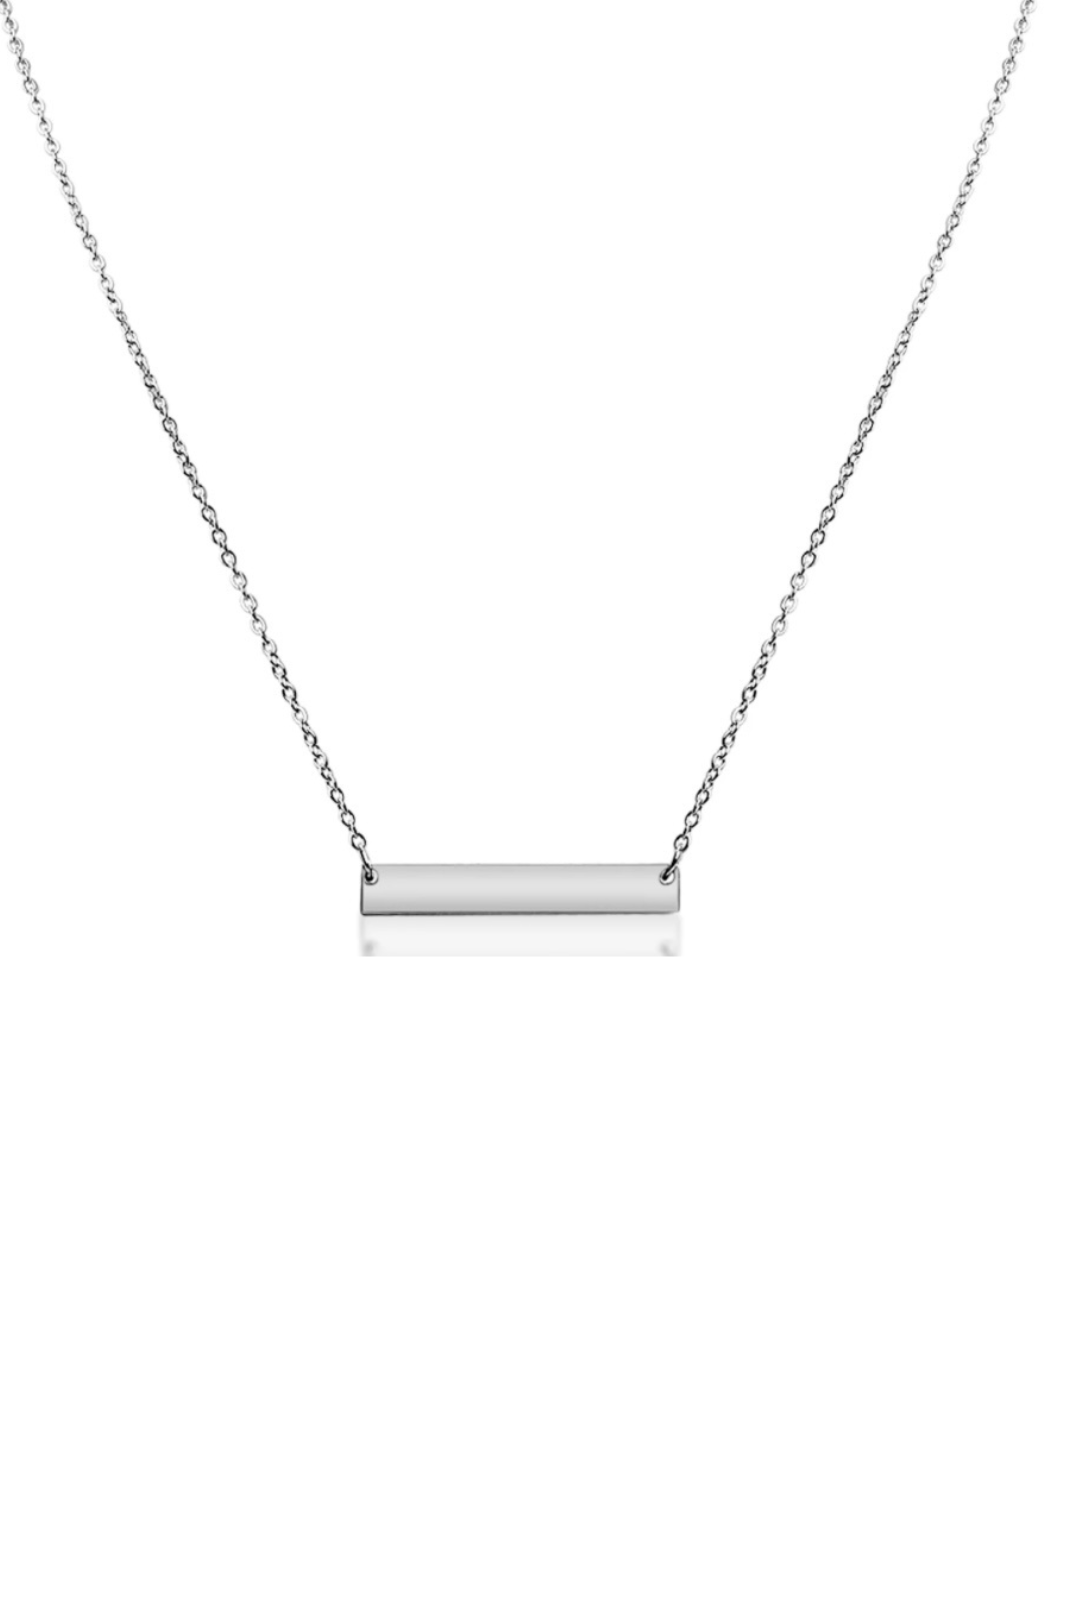 Silver Bar Necklace - Engravable